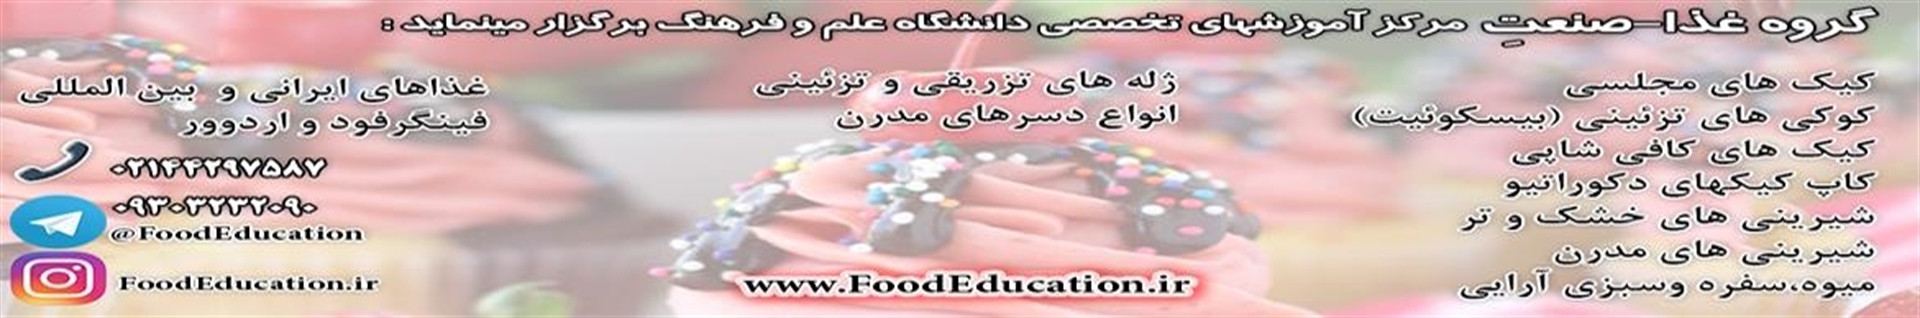 FoodEducation